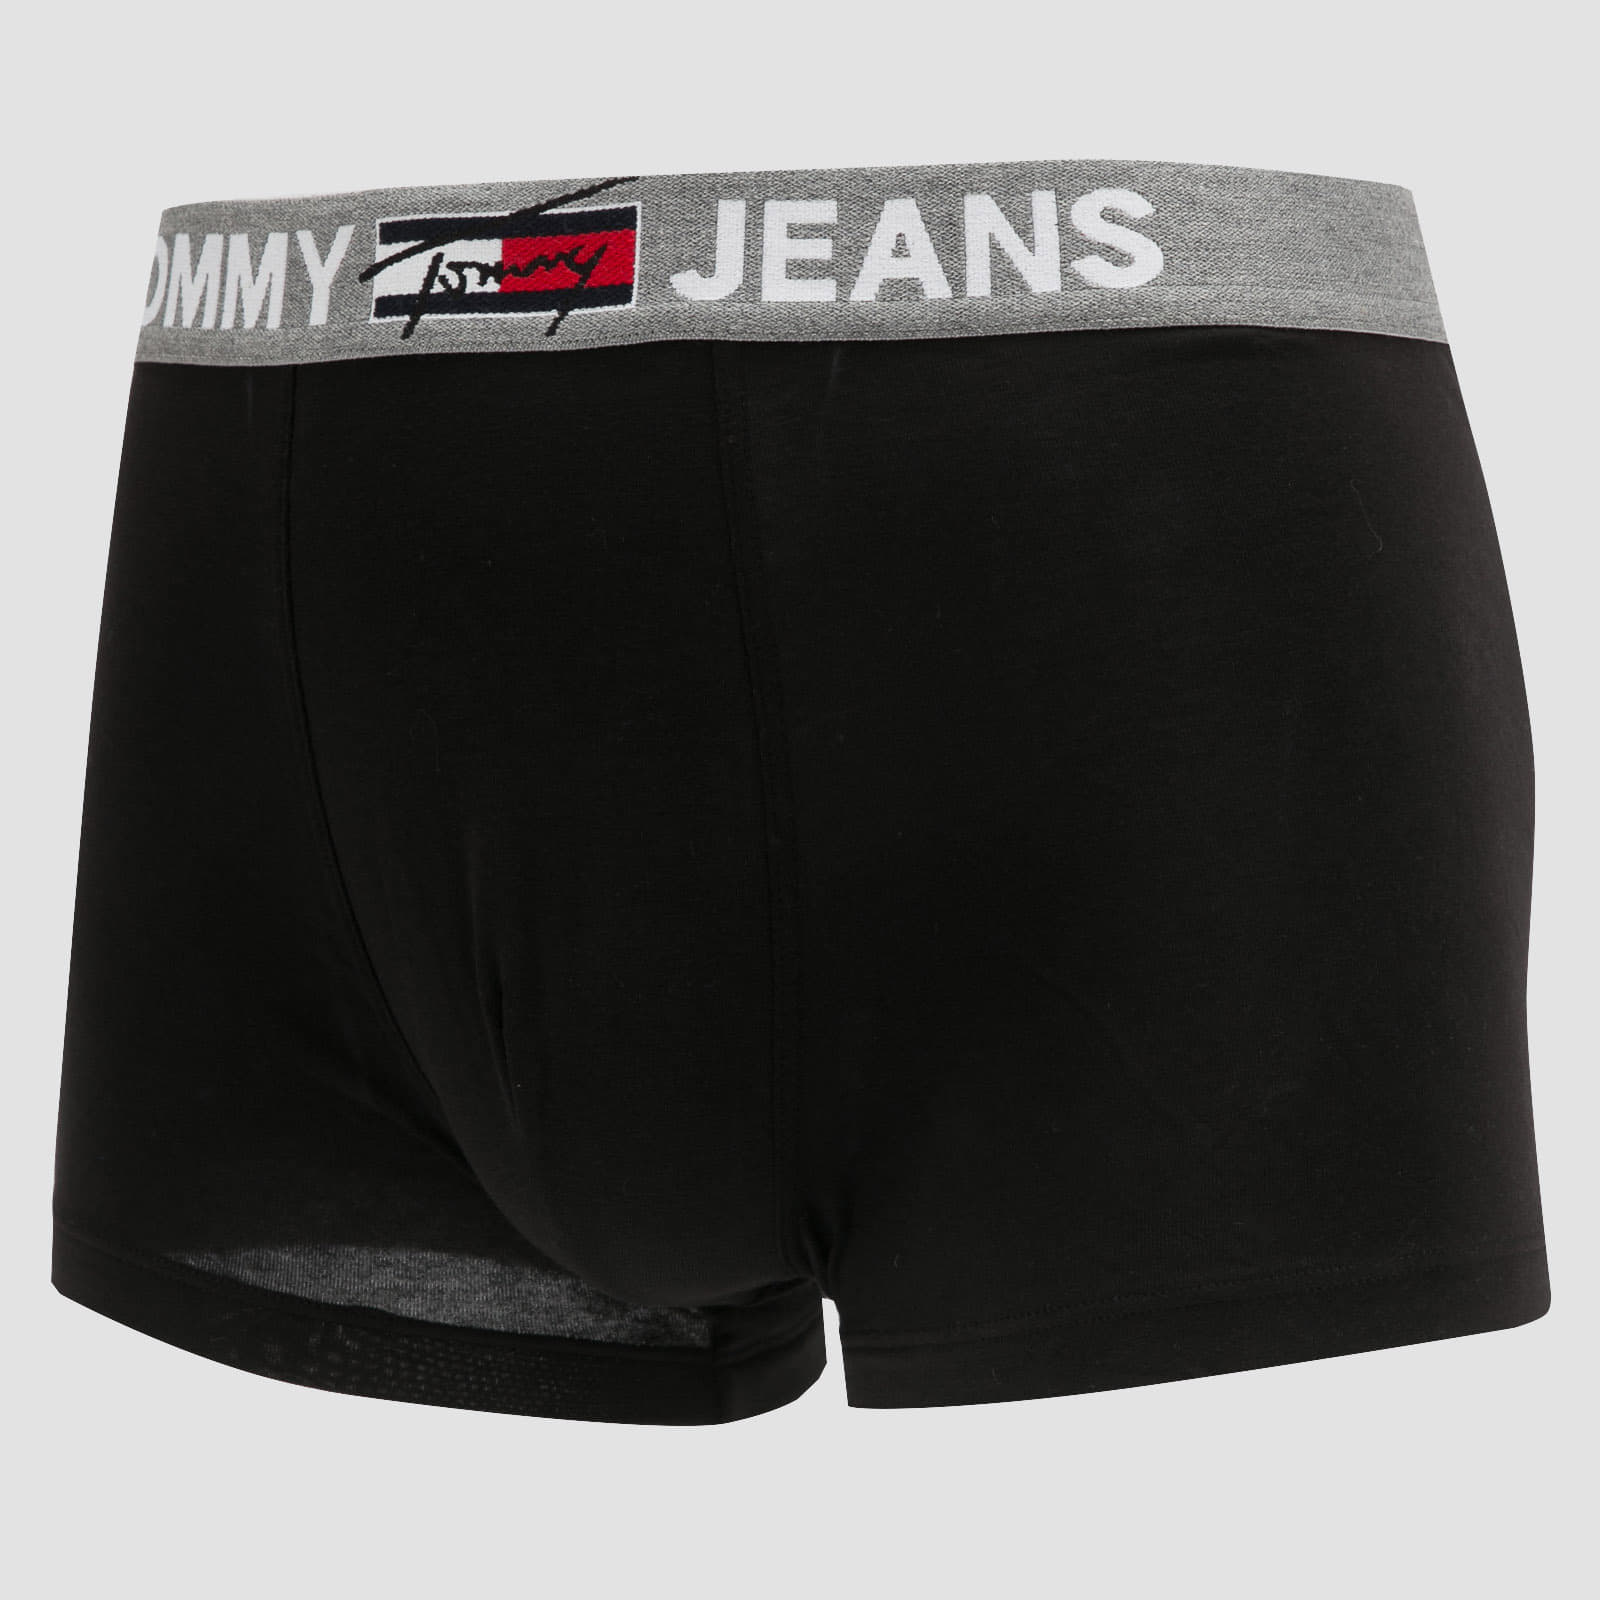 Boxer shorts Tommy Hilfiger Jeans Trunk Black